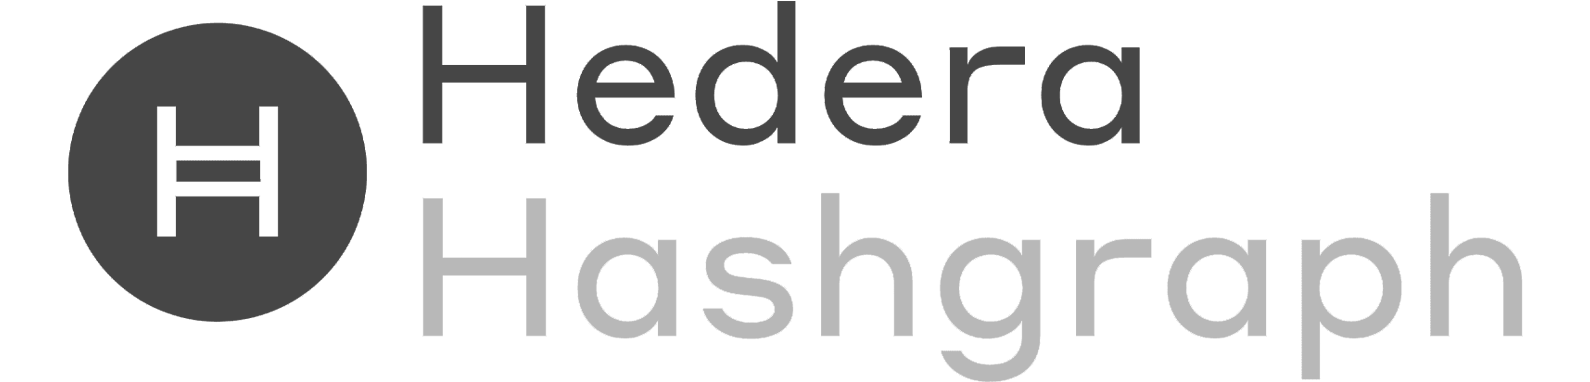 Header Hashgraph Logo